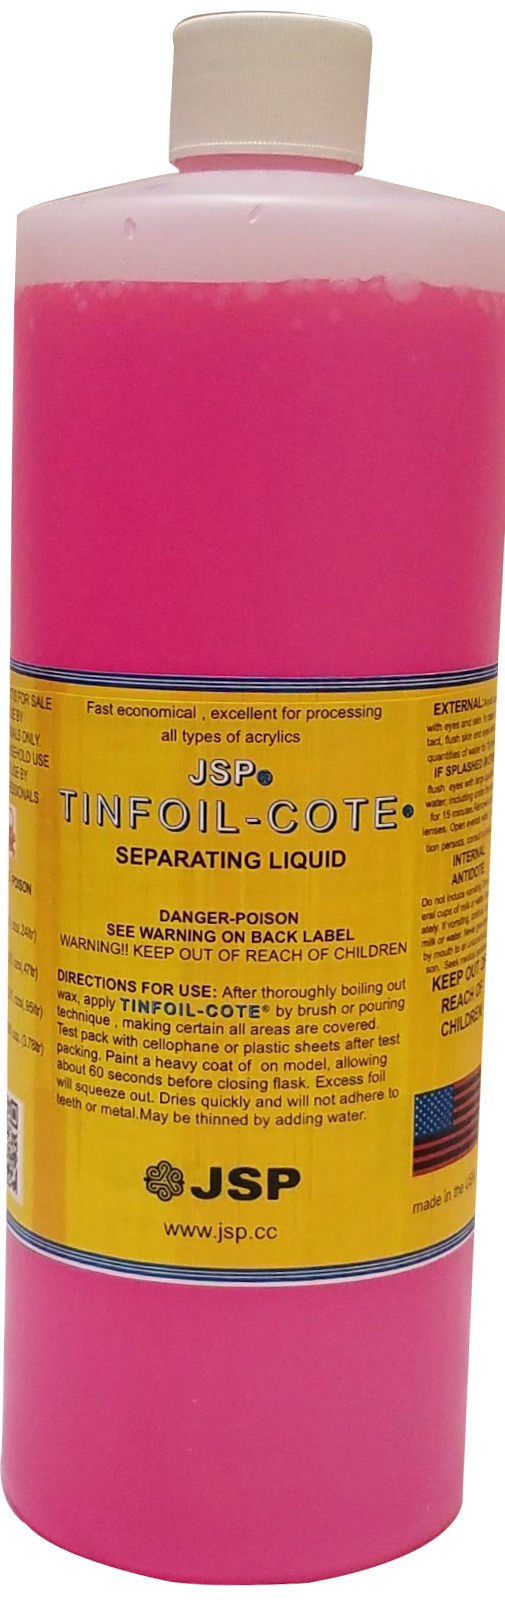 JSP® TINFOIL-COTE SEPARATING LIQUID 16 ozs